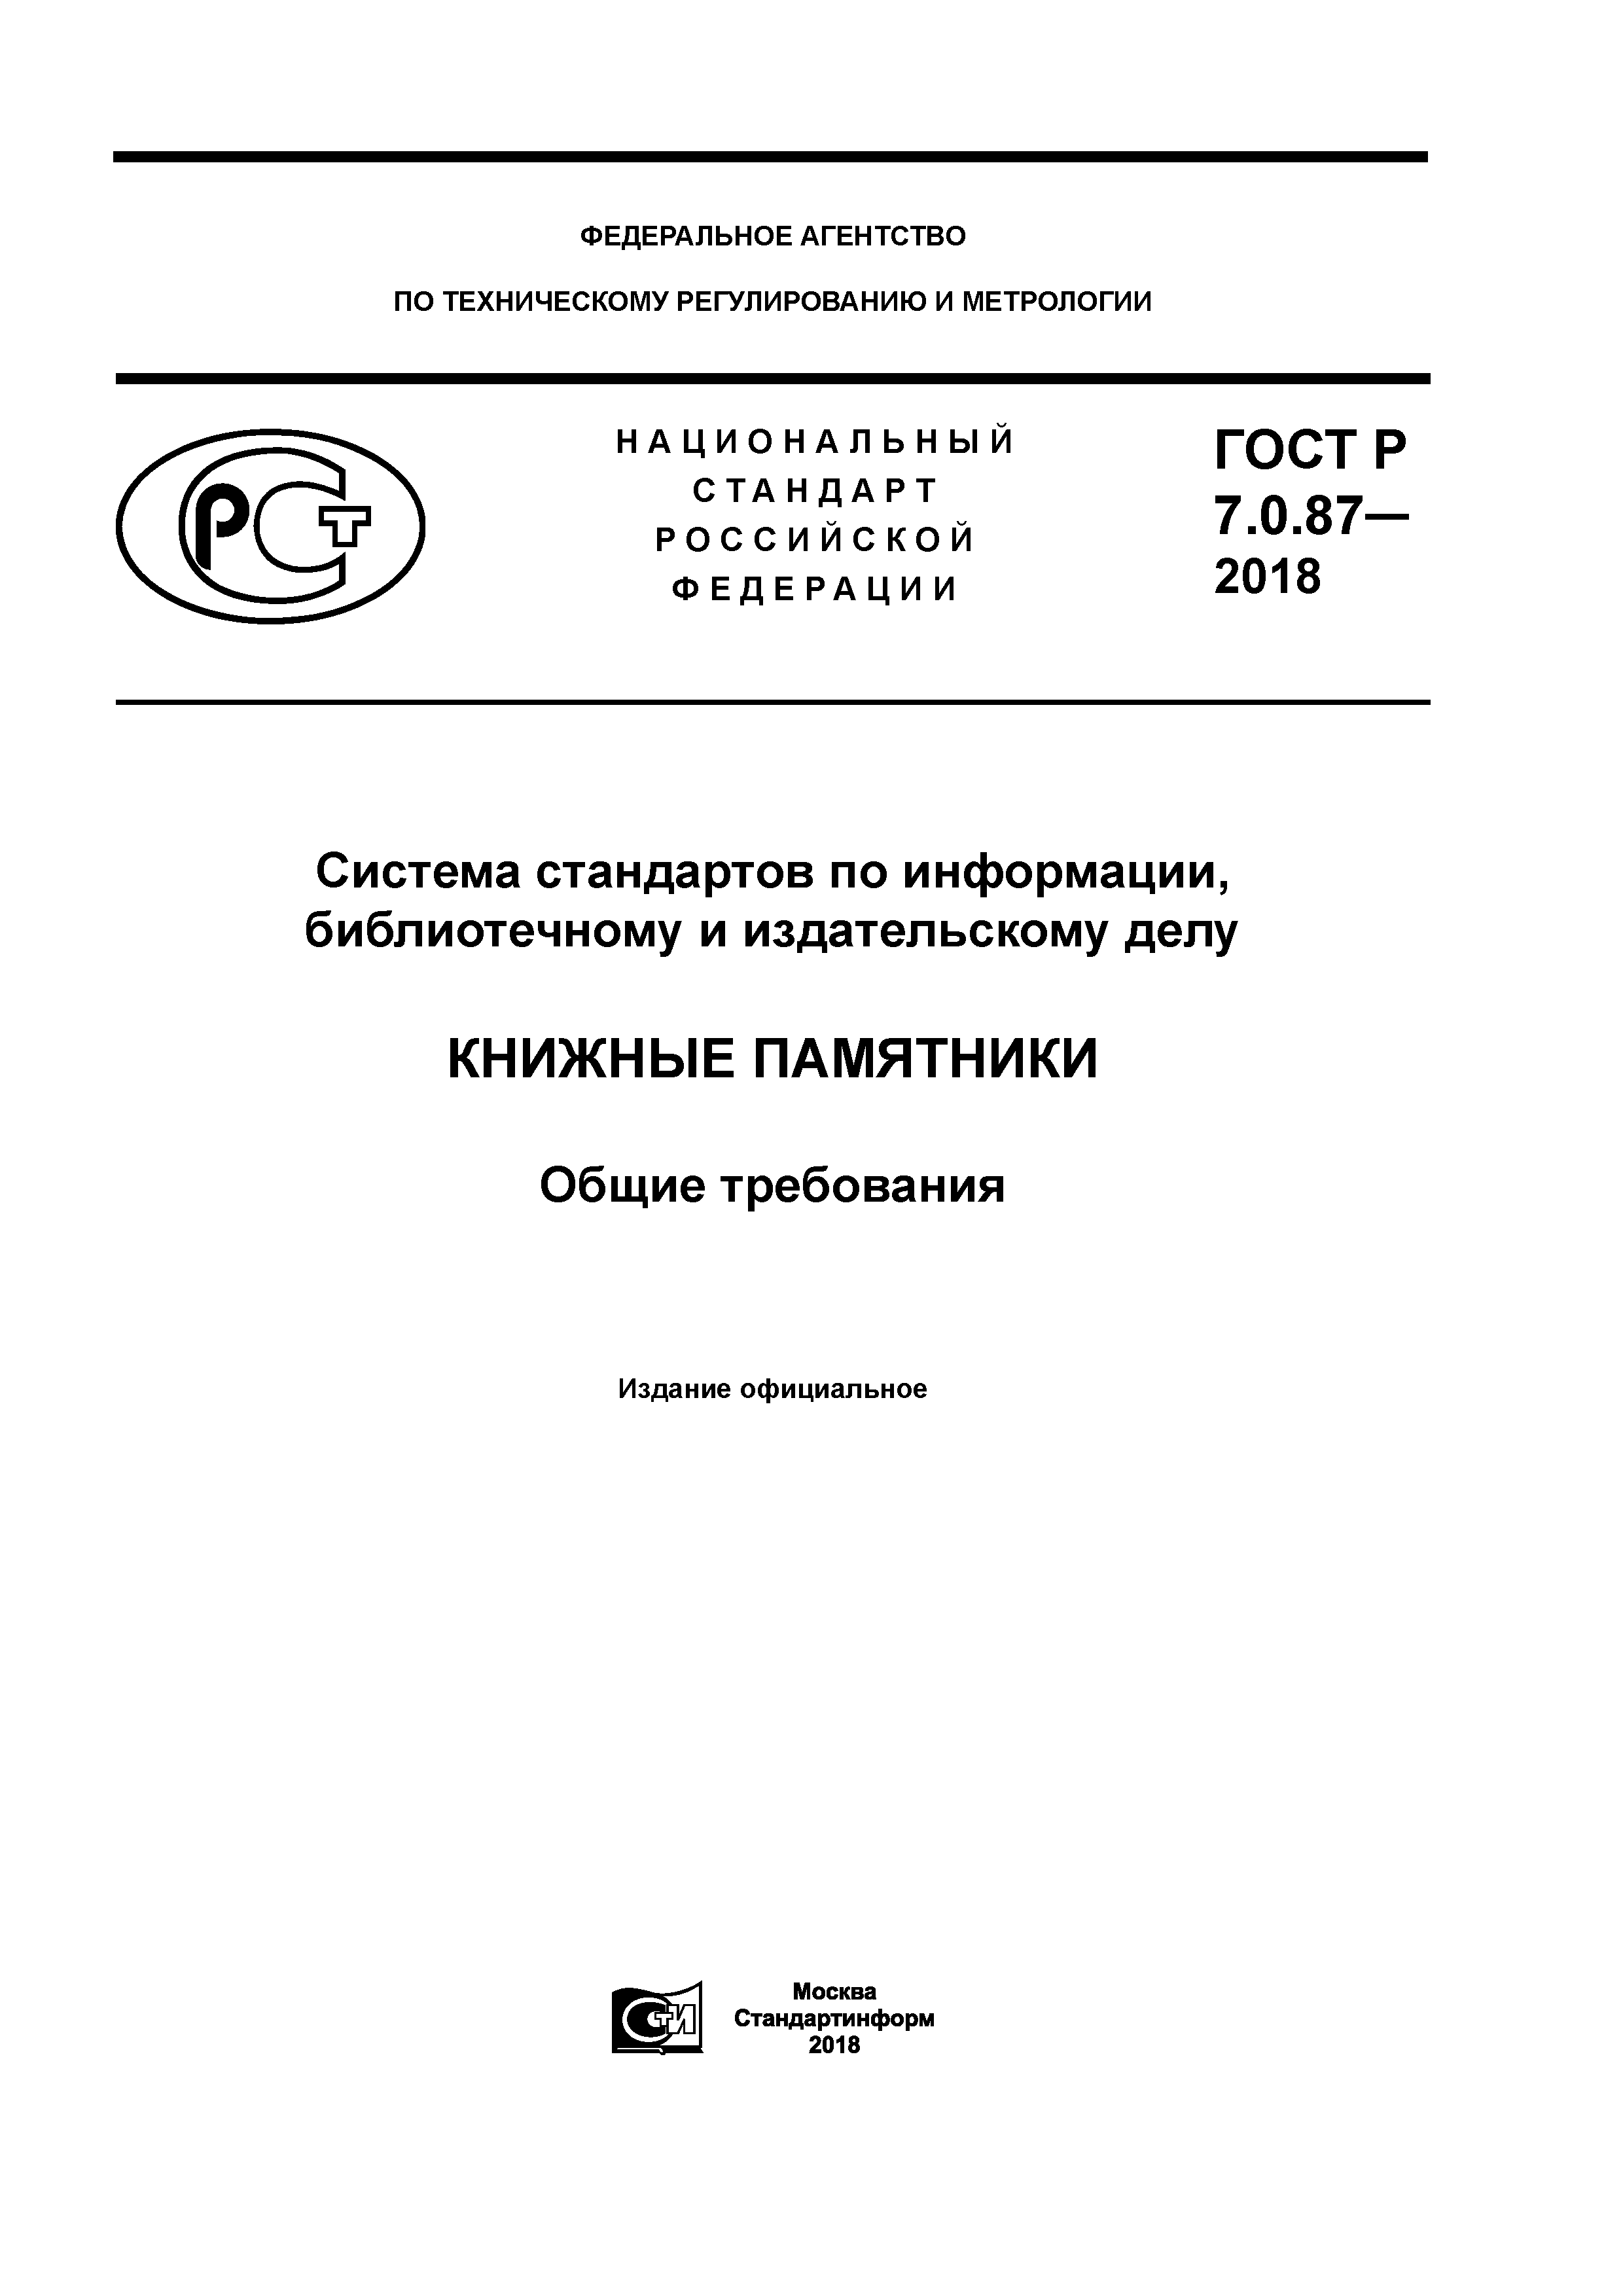 ГОСТ Р 7.0.87-2018